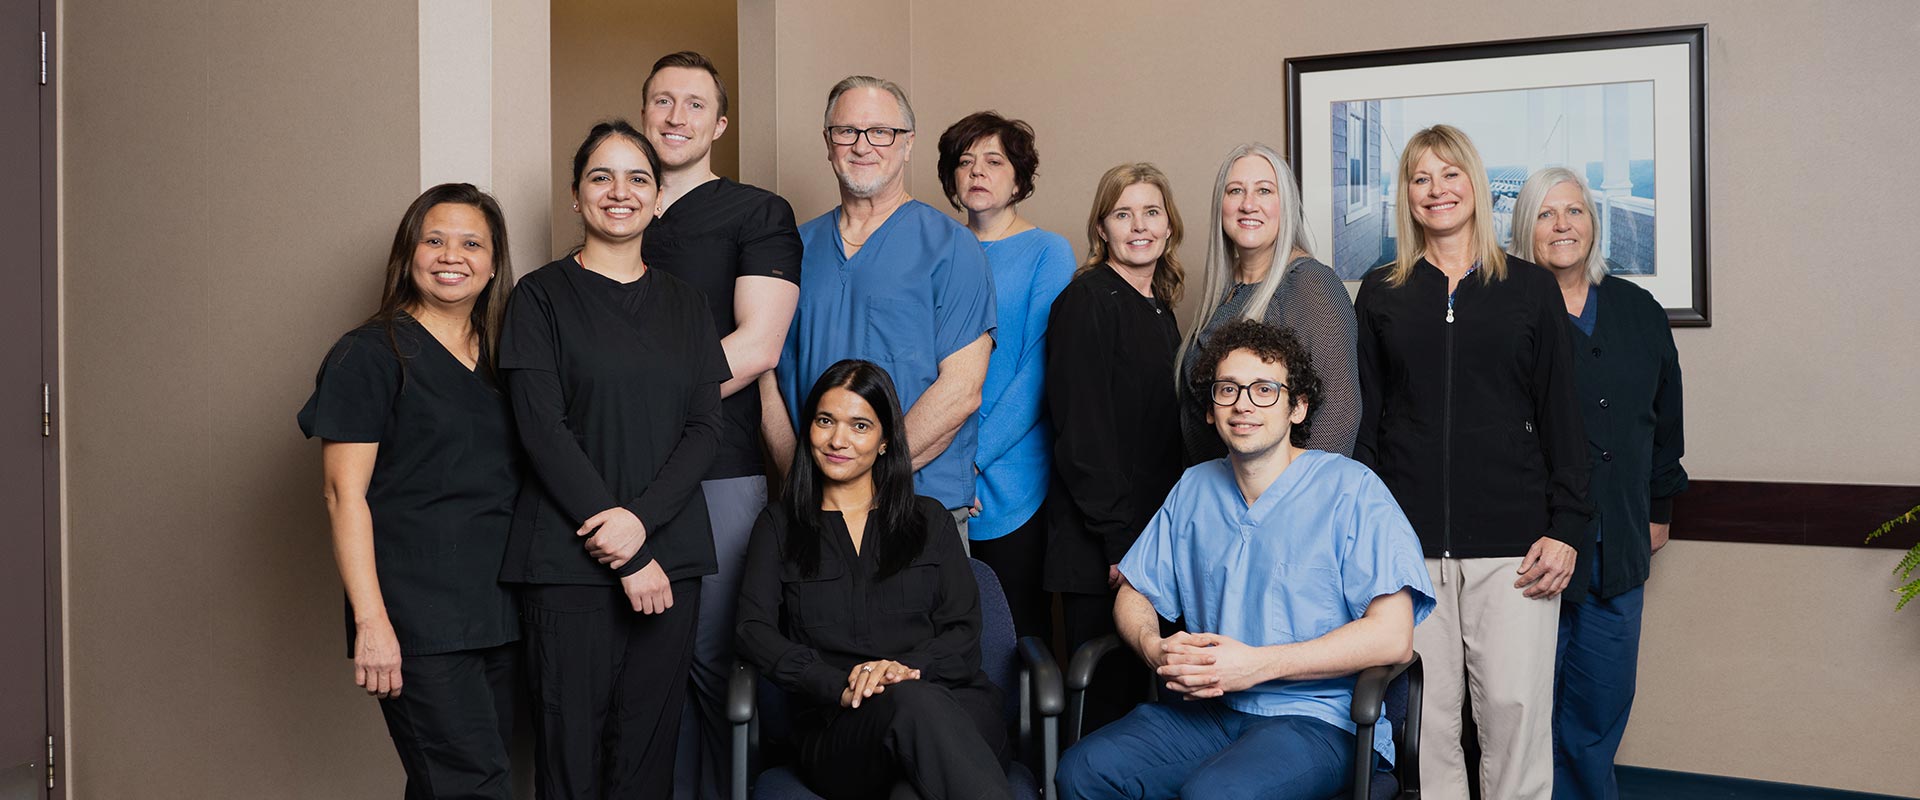 Meet Our Friendly Dental Team | Forest Lane Dental Clinic | Family & General Dentists | SE Calgary